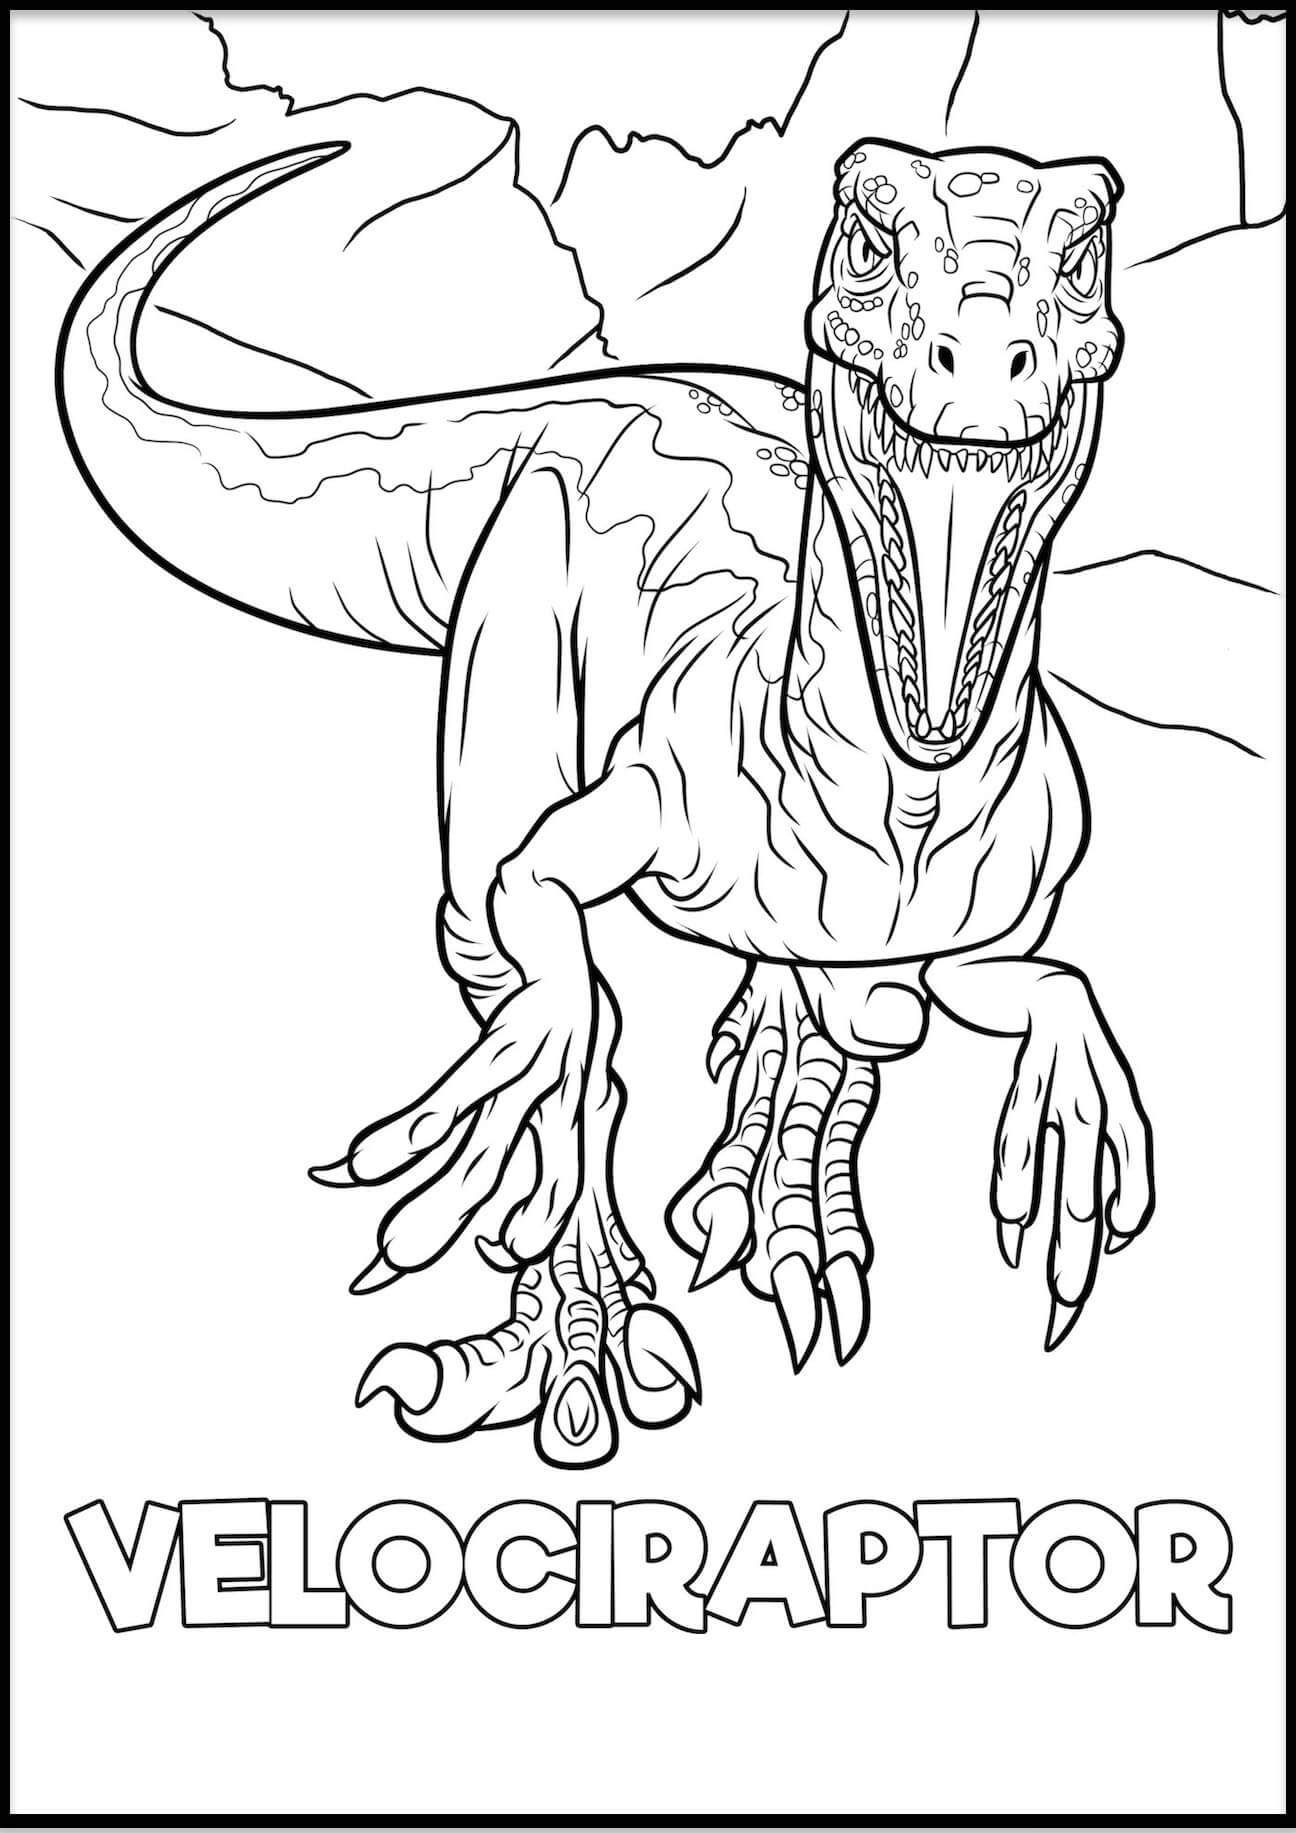 Målarbild Velociraptor